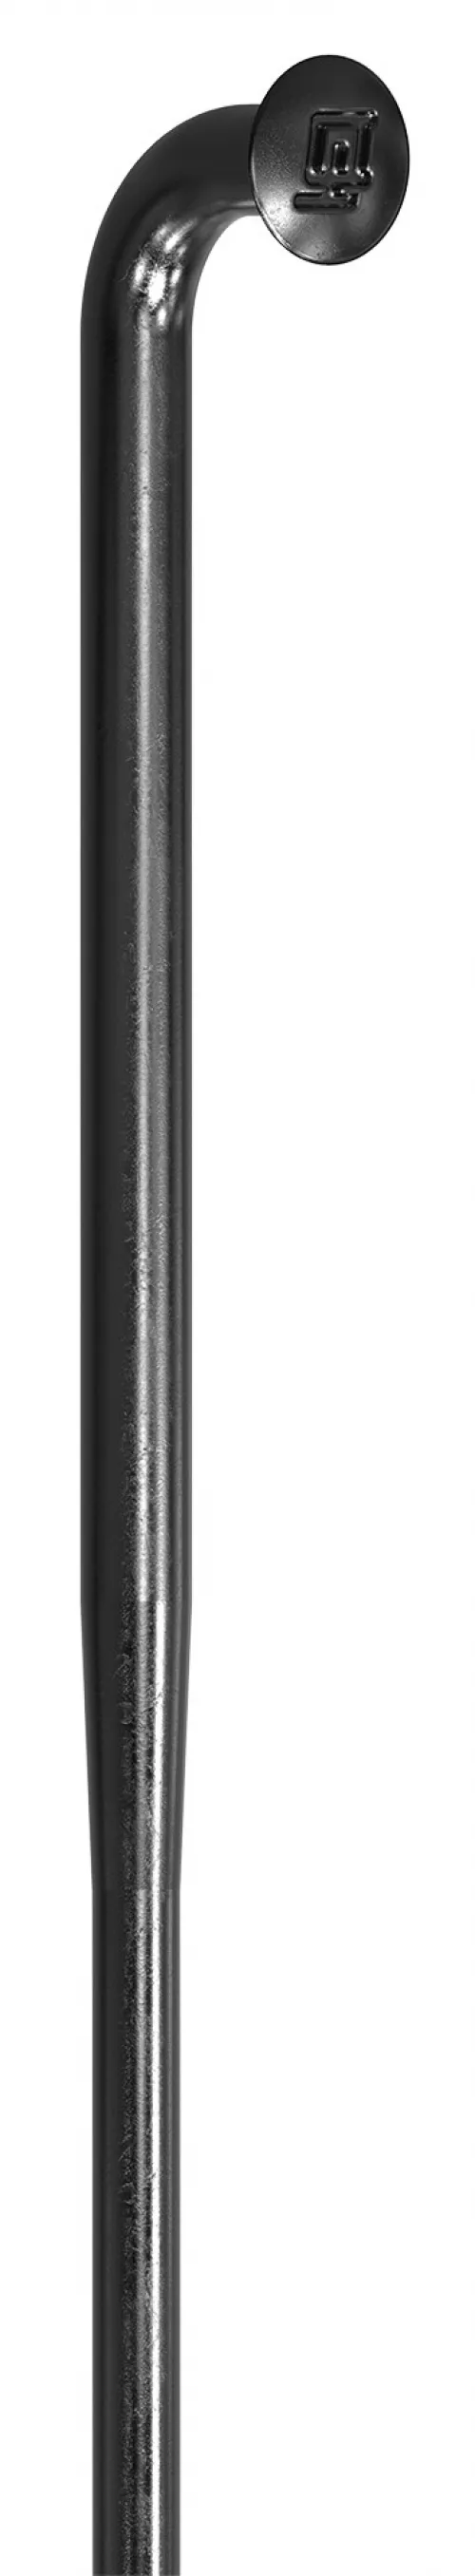 Спицы DT Swiss Alpine III Standard (J-bend) 2.0/1.8/2.34mm x 262mm black 100шт